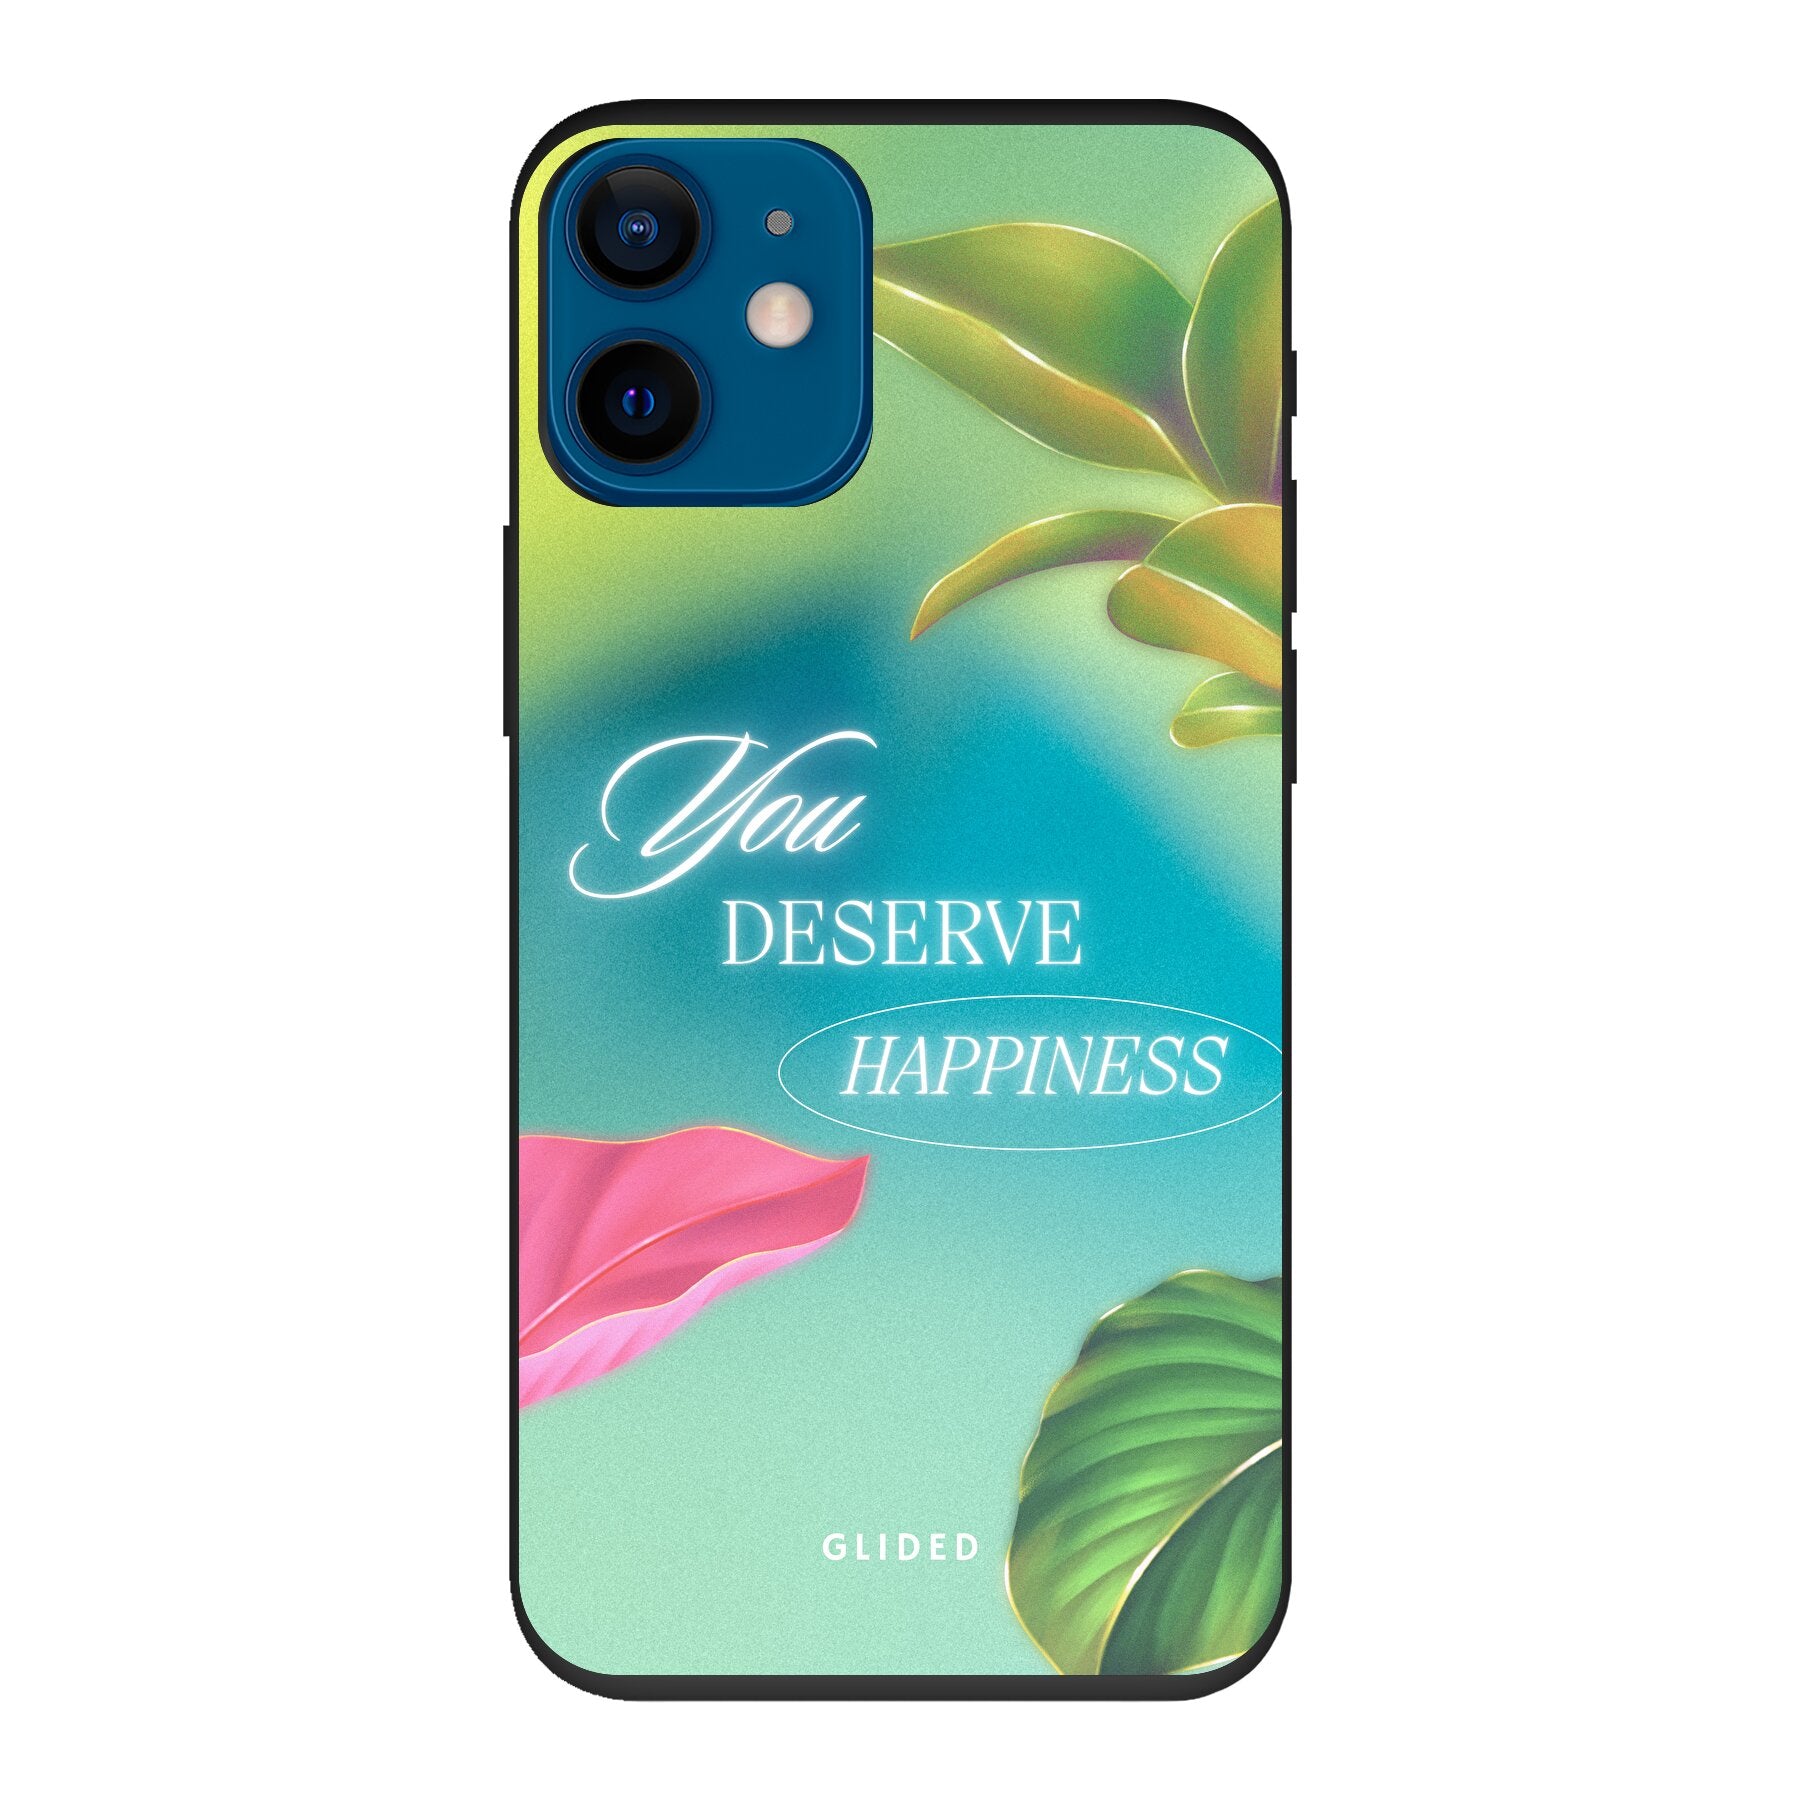 Happiness - iPhone 12 mini - Biologisch Abbaubar